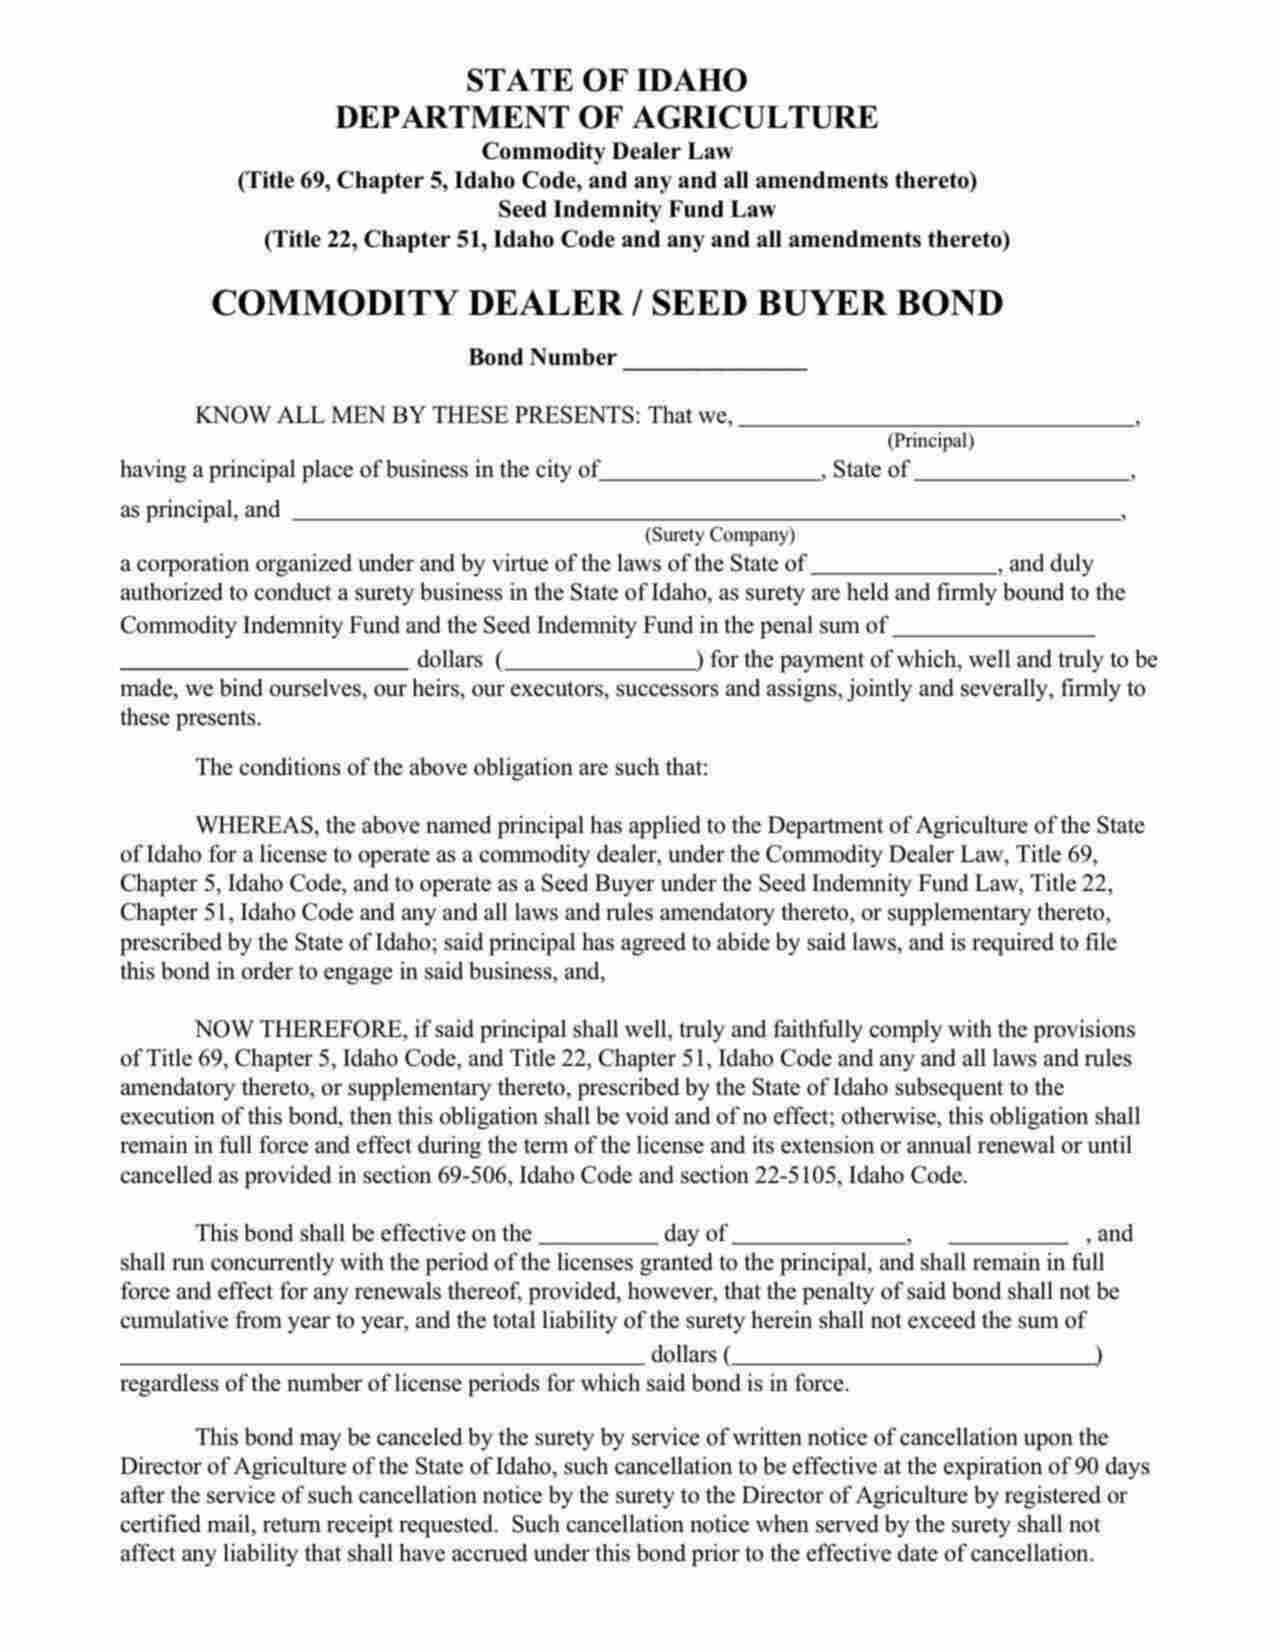 Idaho Commodity Dealer / Seed Buyer Bond Form